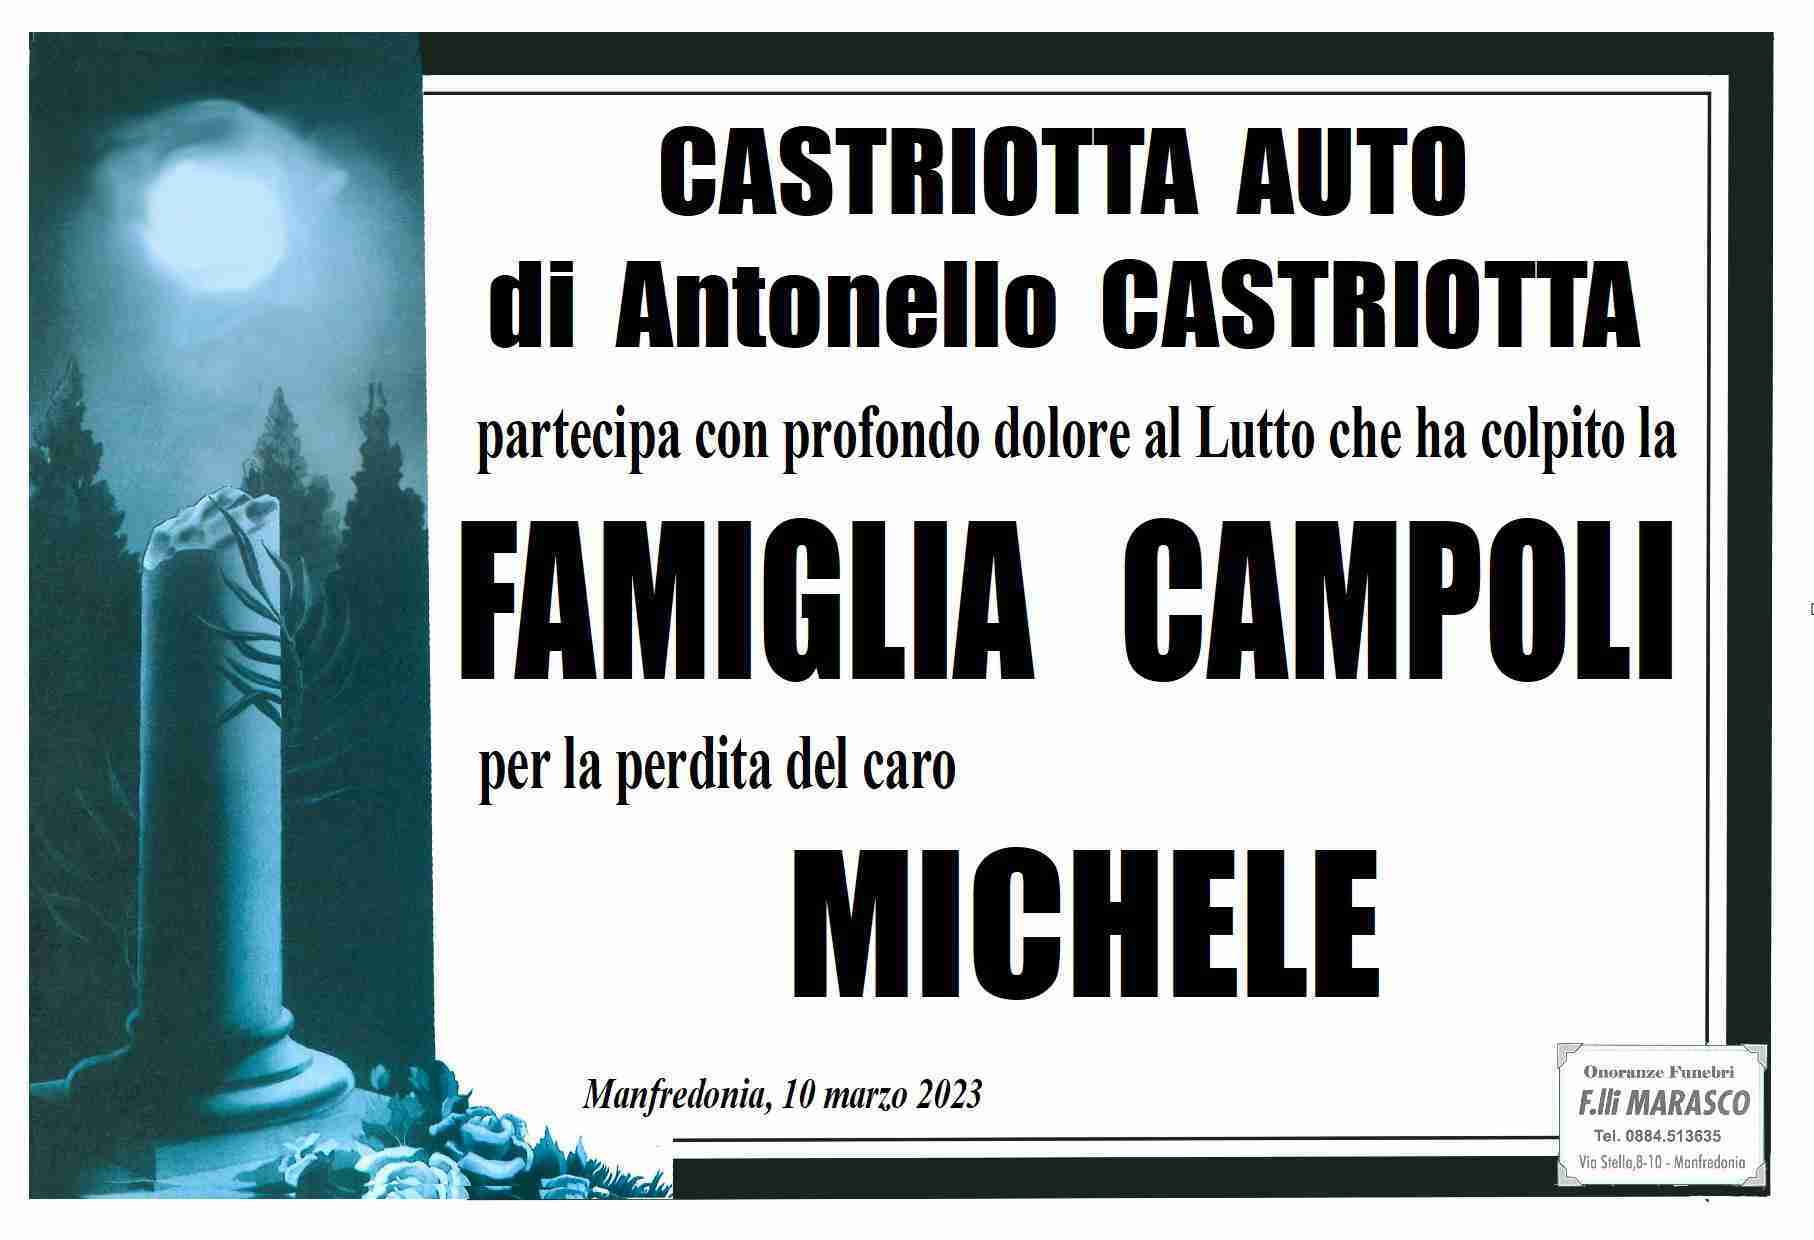 Michele Campoli